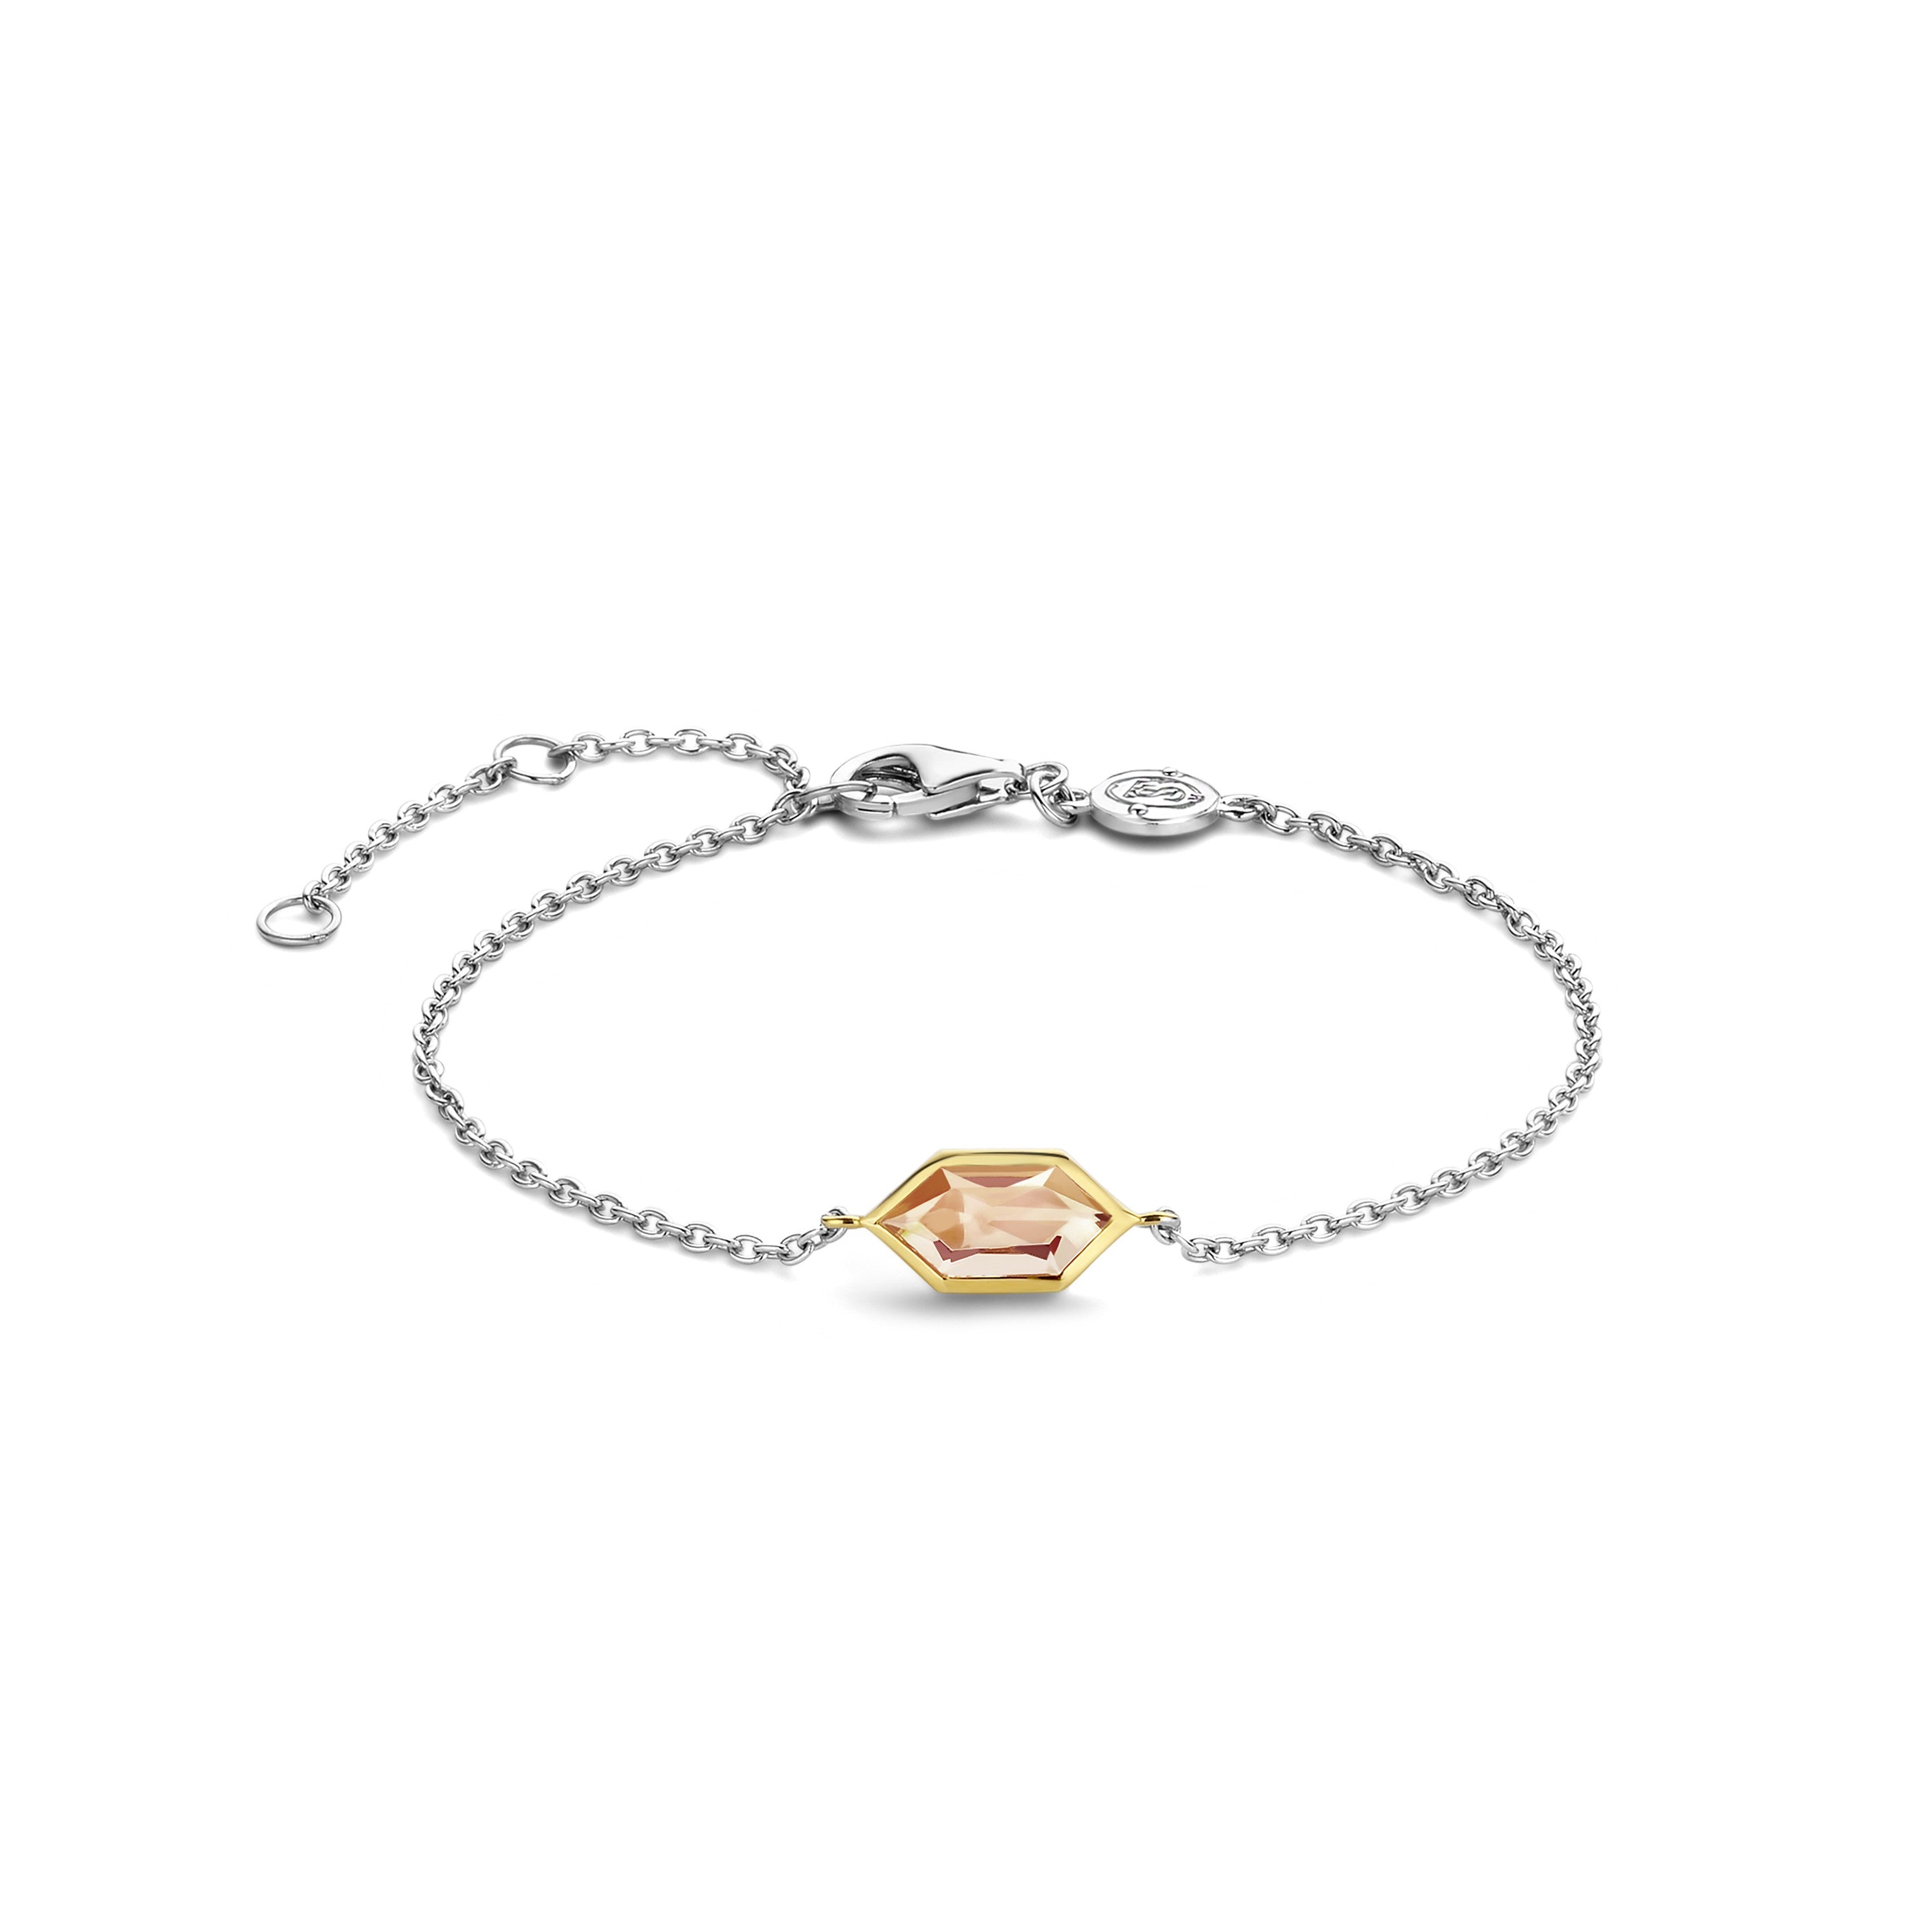 Celestial Peach Bracelet